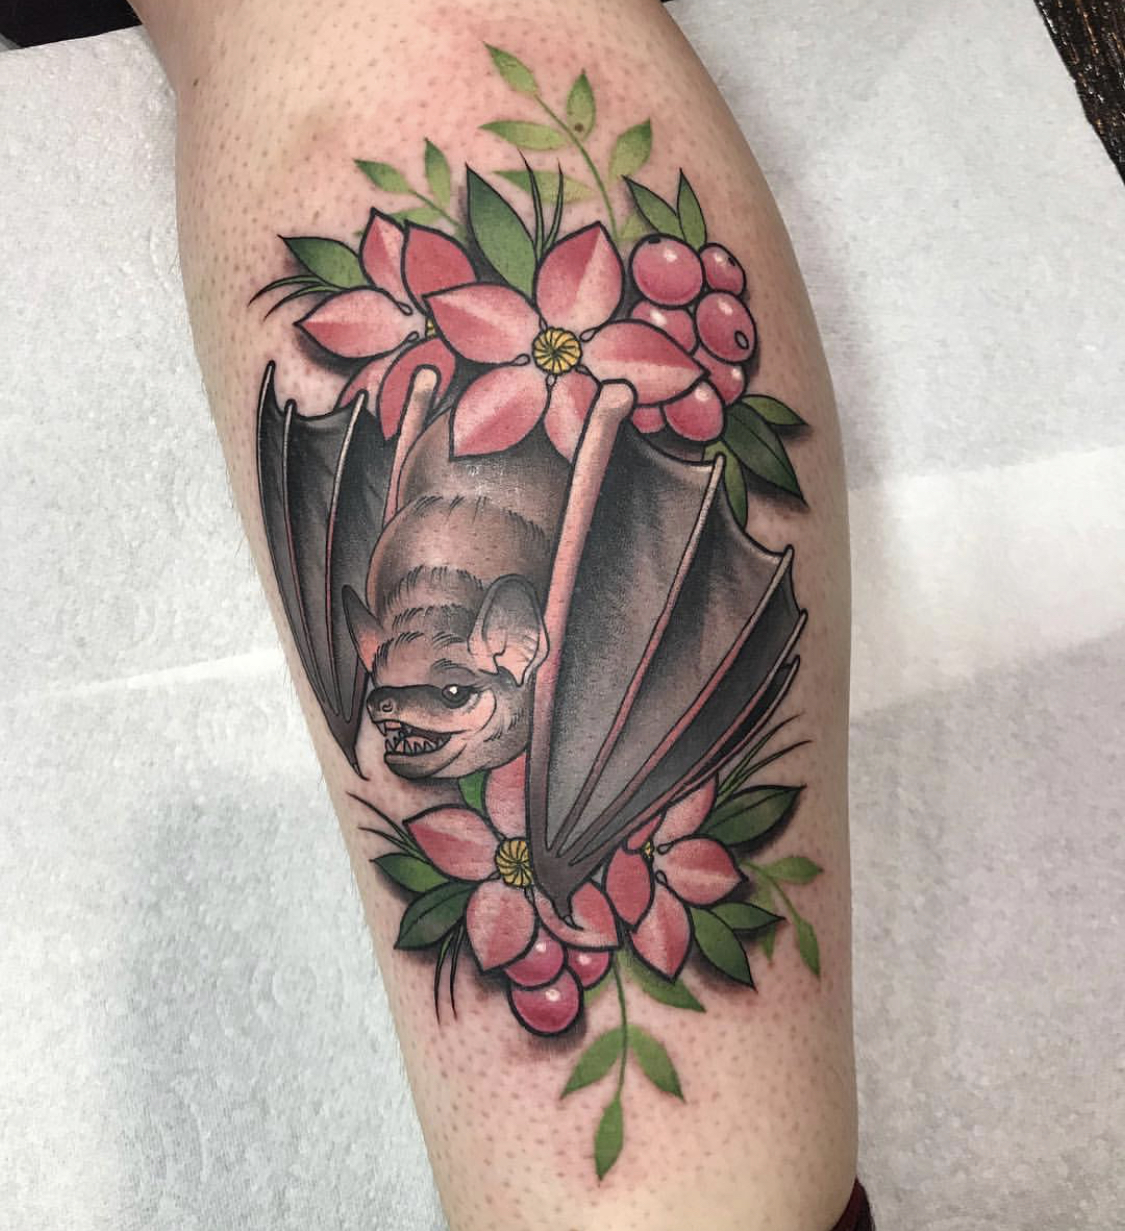 Bat tattoo with flowers